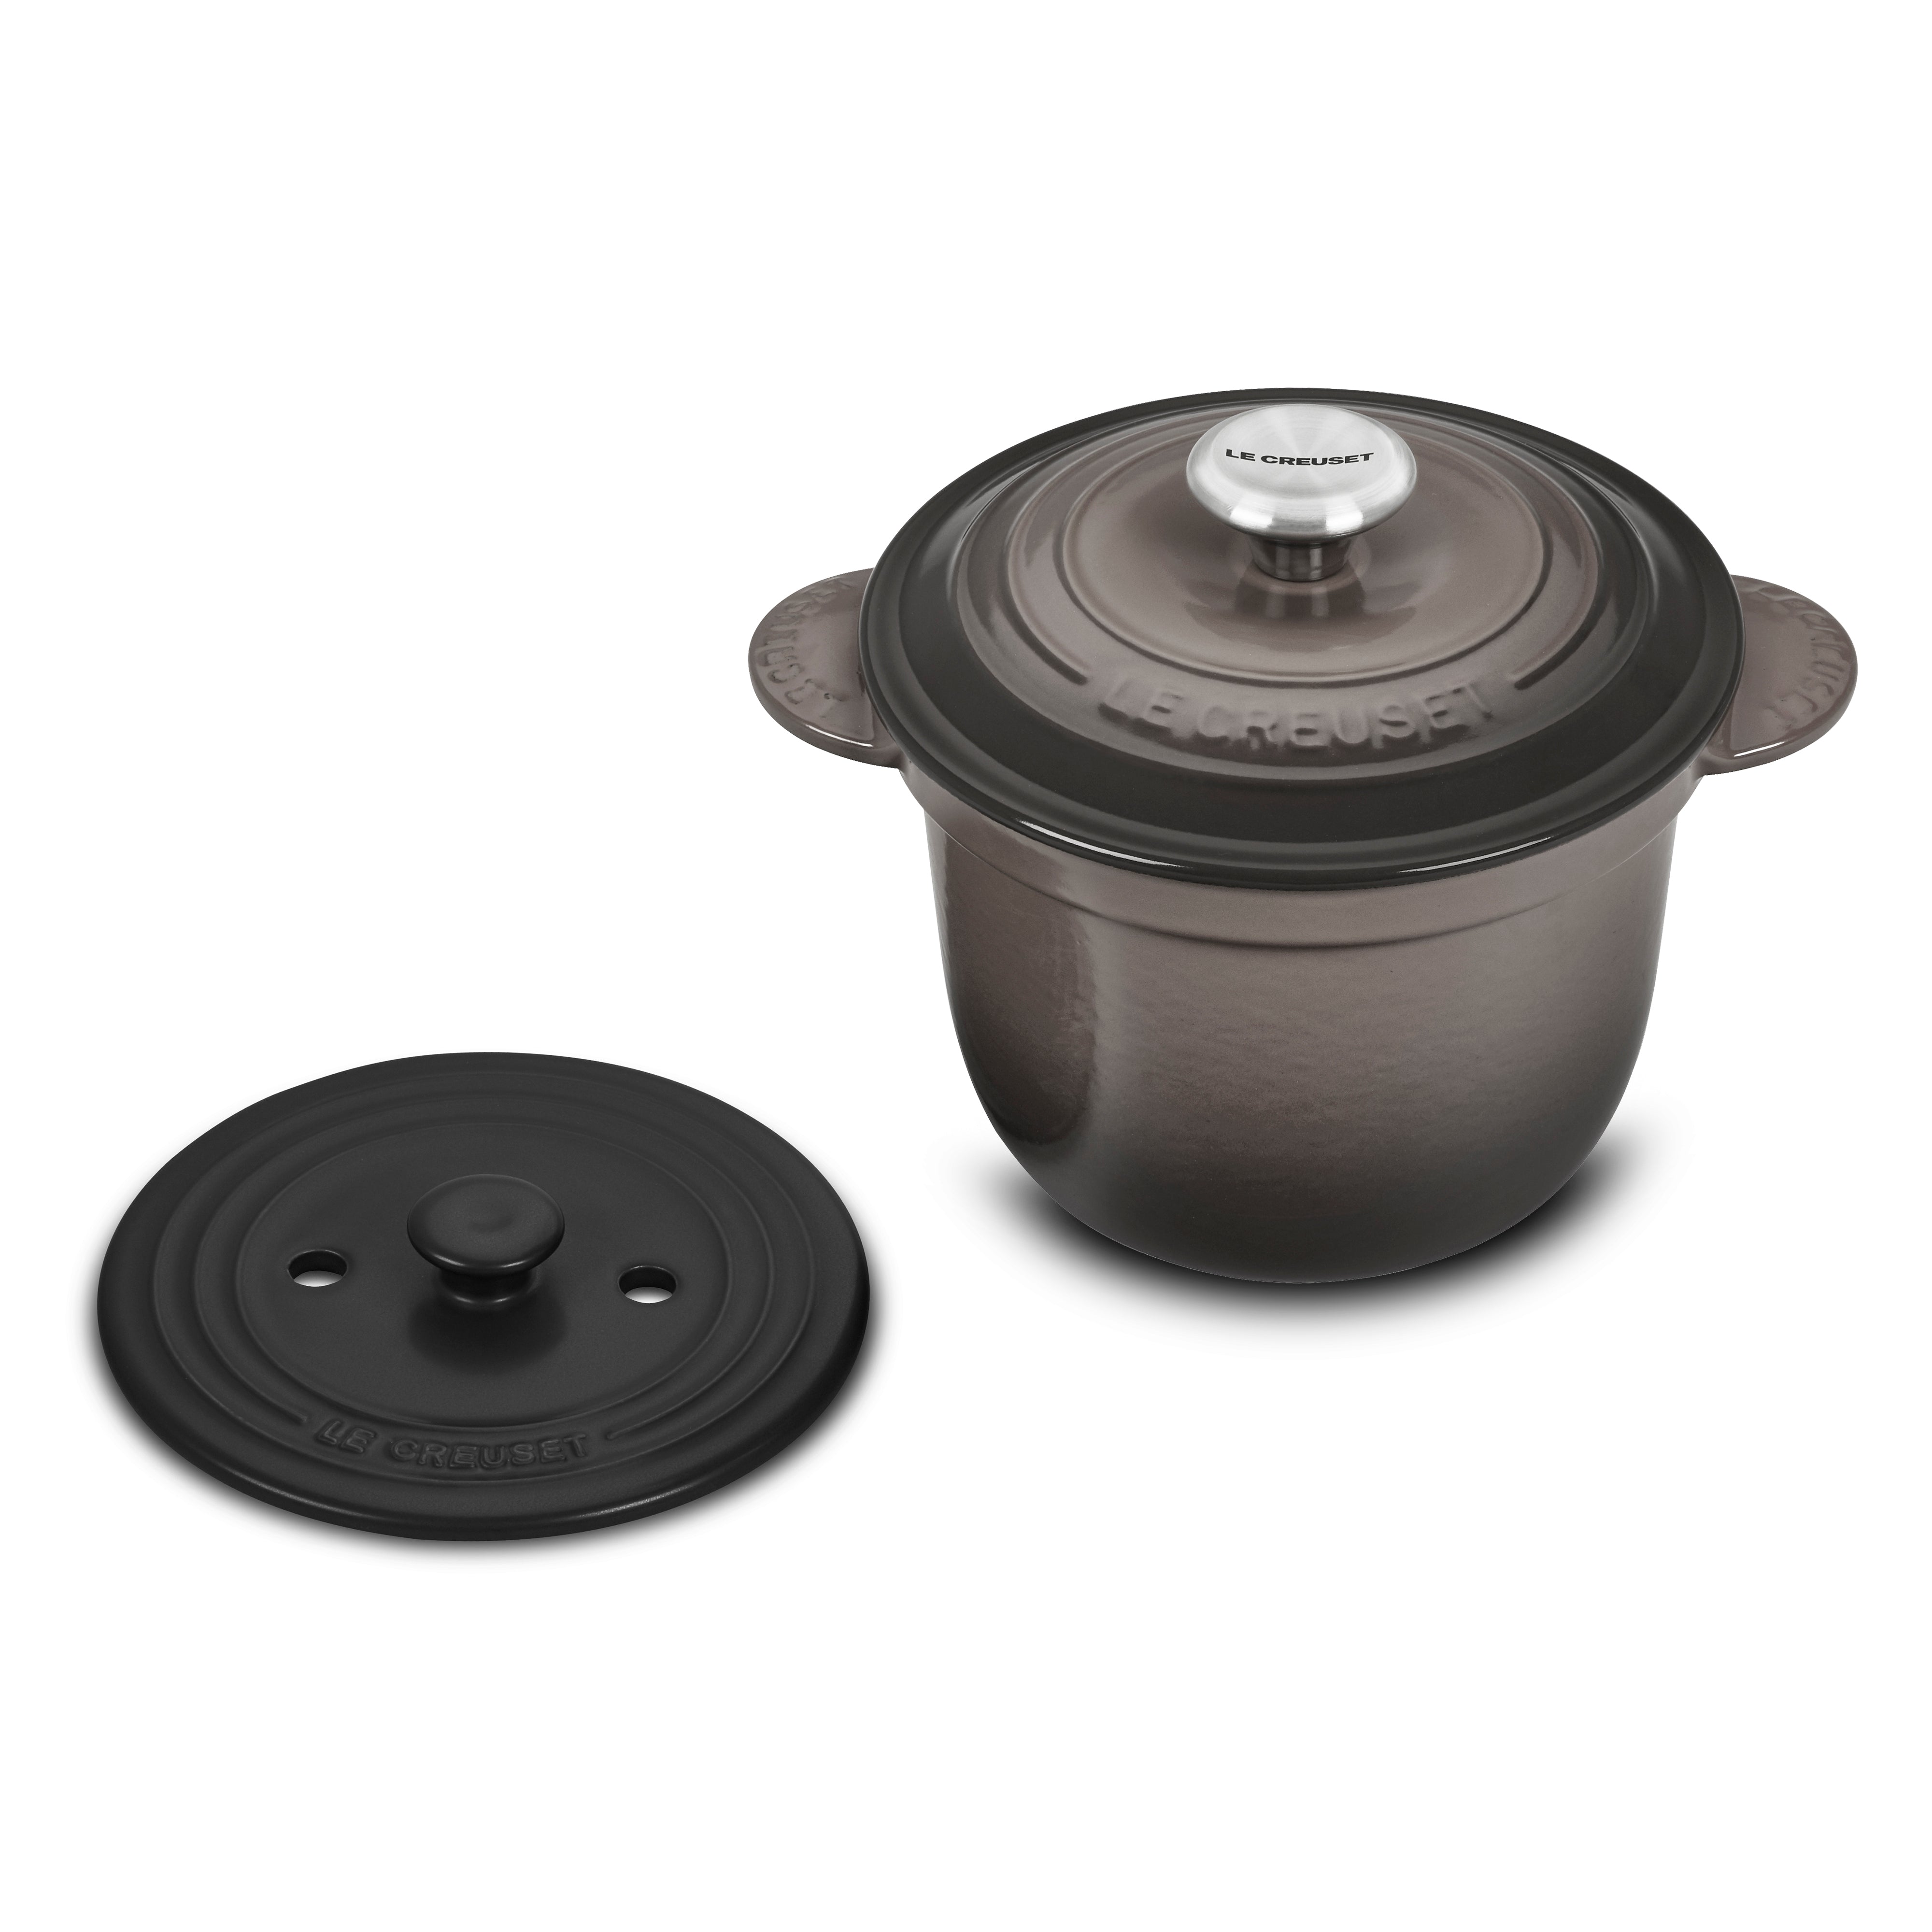  Le Creuset Enameled Cast Iron Rice Pot with Lid & Stoneware  Insert, 2.25 qt., White: Home & Kitchen